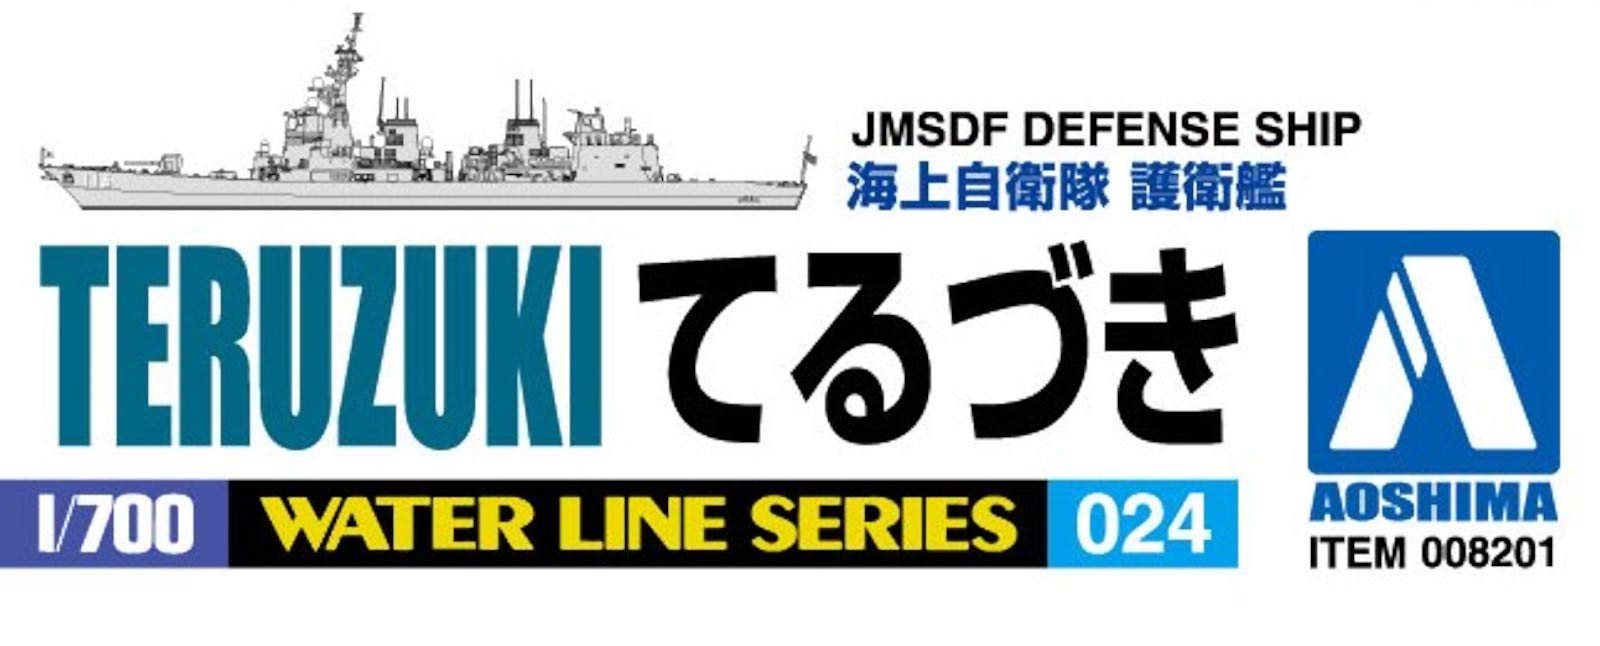 AOSHIMA Waterline 1/700 Jmsdf Japanese Defense Ship Teruzuki Plastic Model